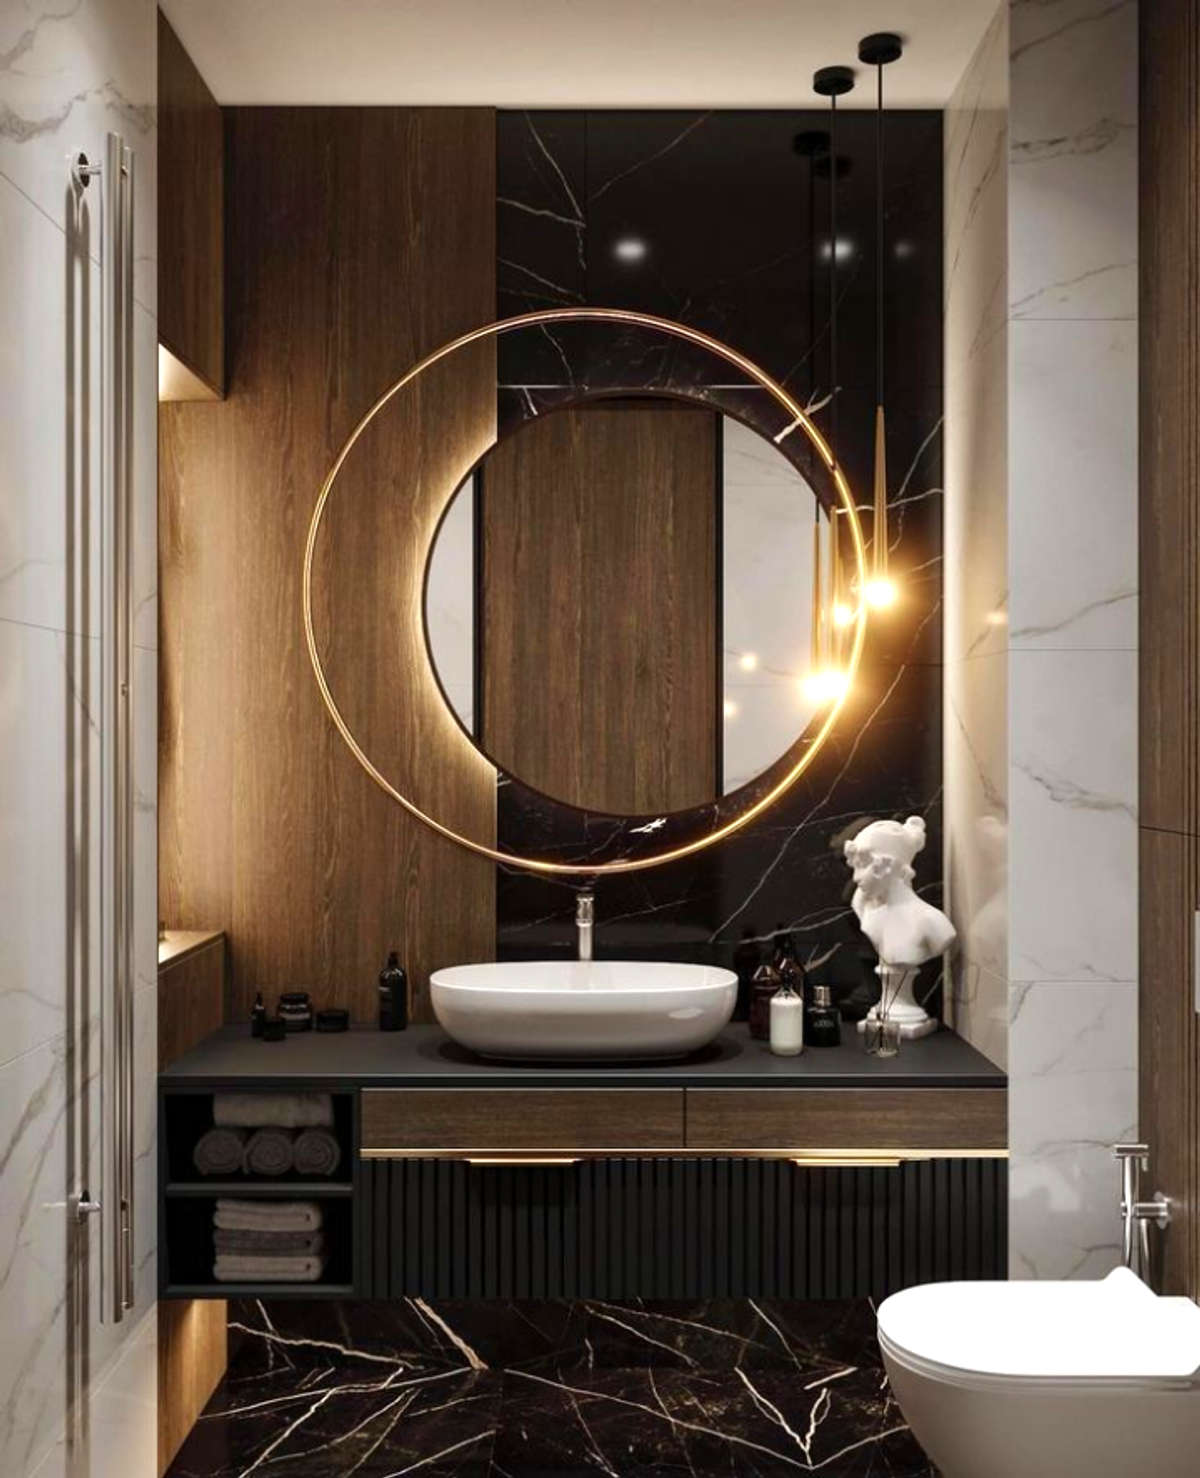 Vanity and mirror design in bathroom and toilet

#mirrorunit #Washroom #washbasin #vanitydesigns #vanityideas #BathroomDesigns #BathroomIdeas